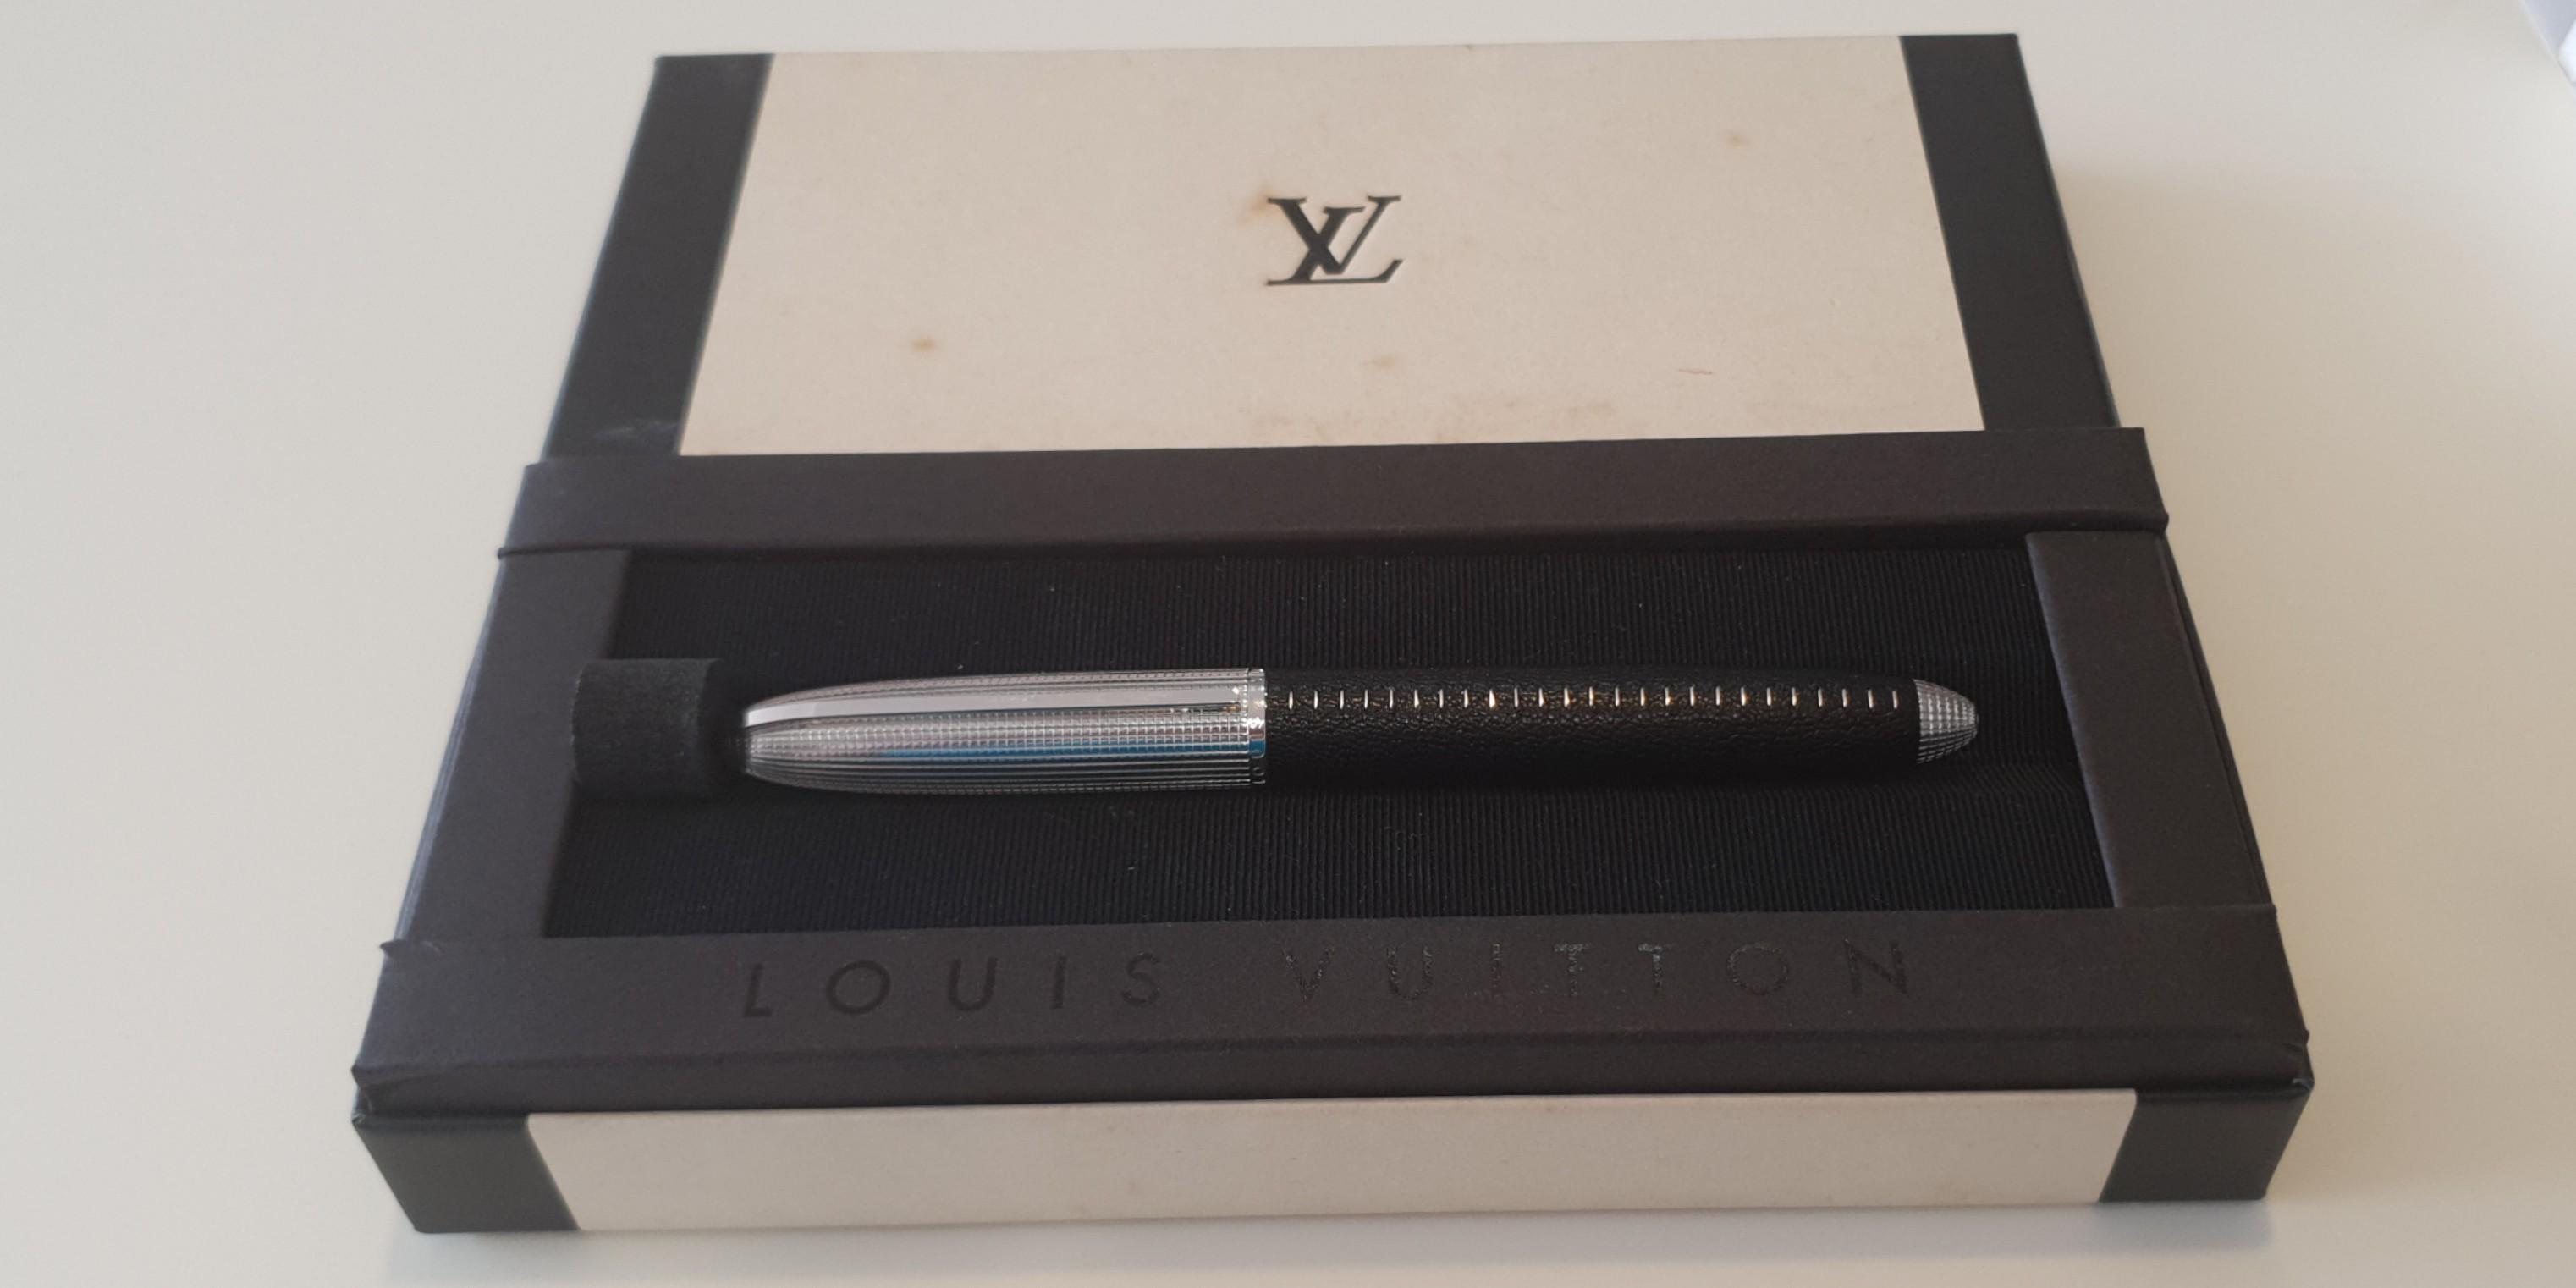 Buy Louis Vuitton Ball Pen [N75020] Online - Best Price Louis